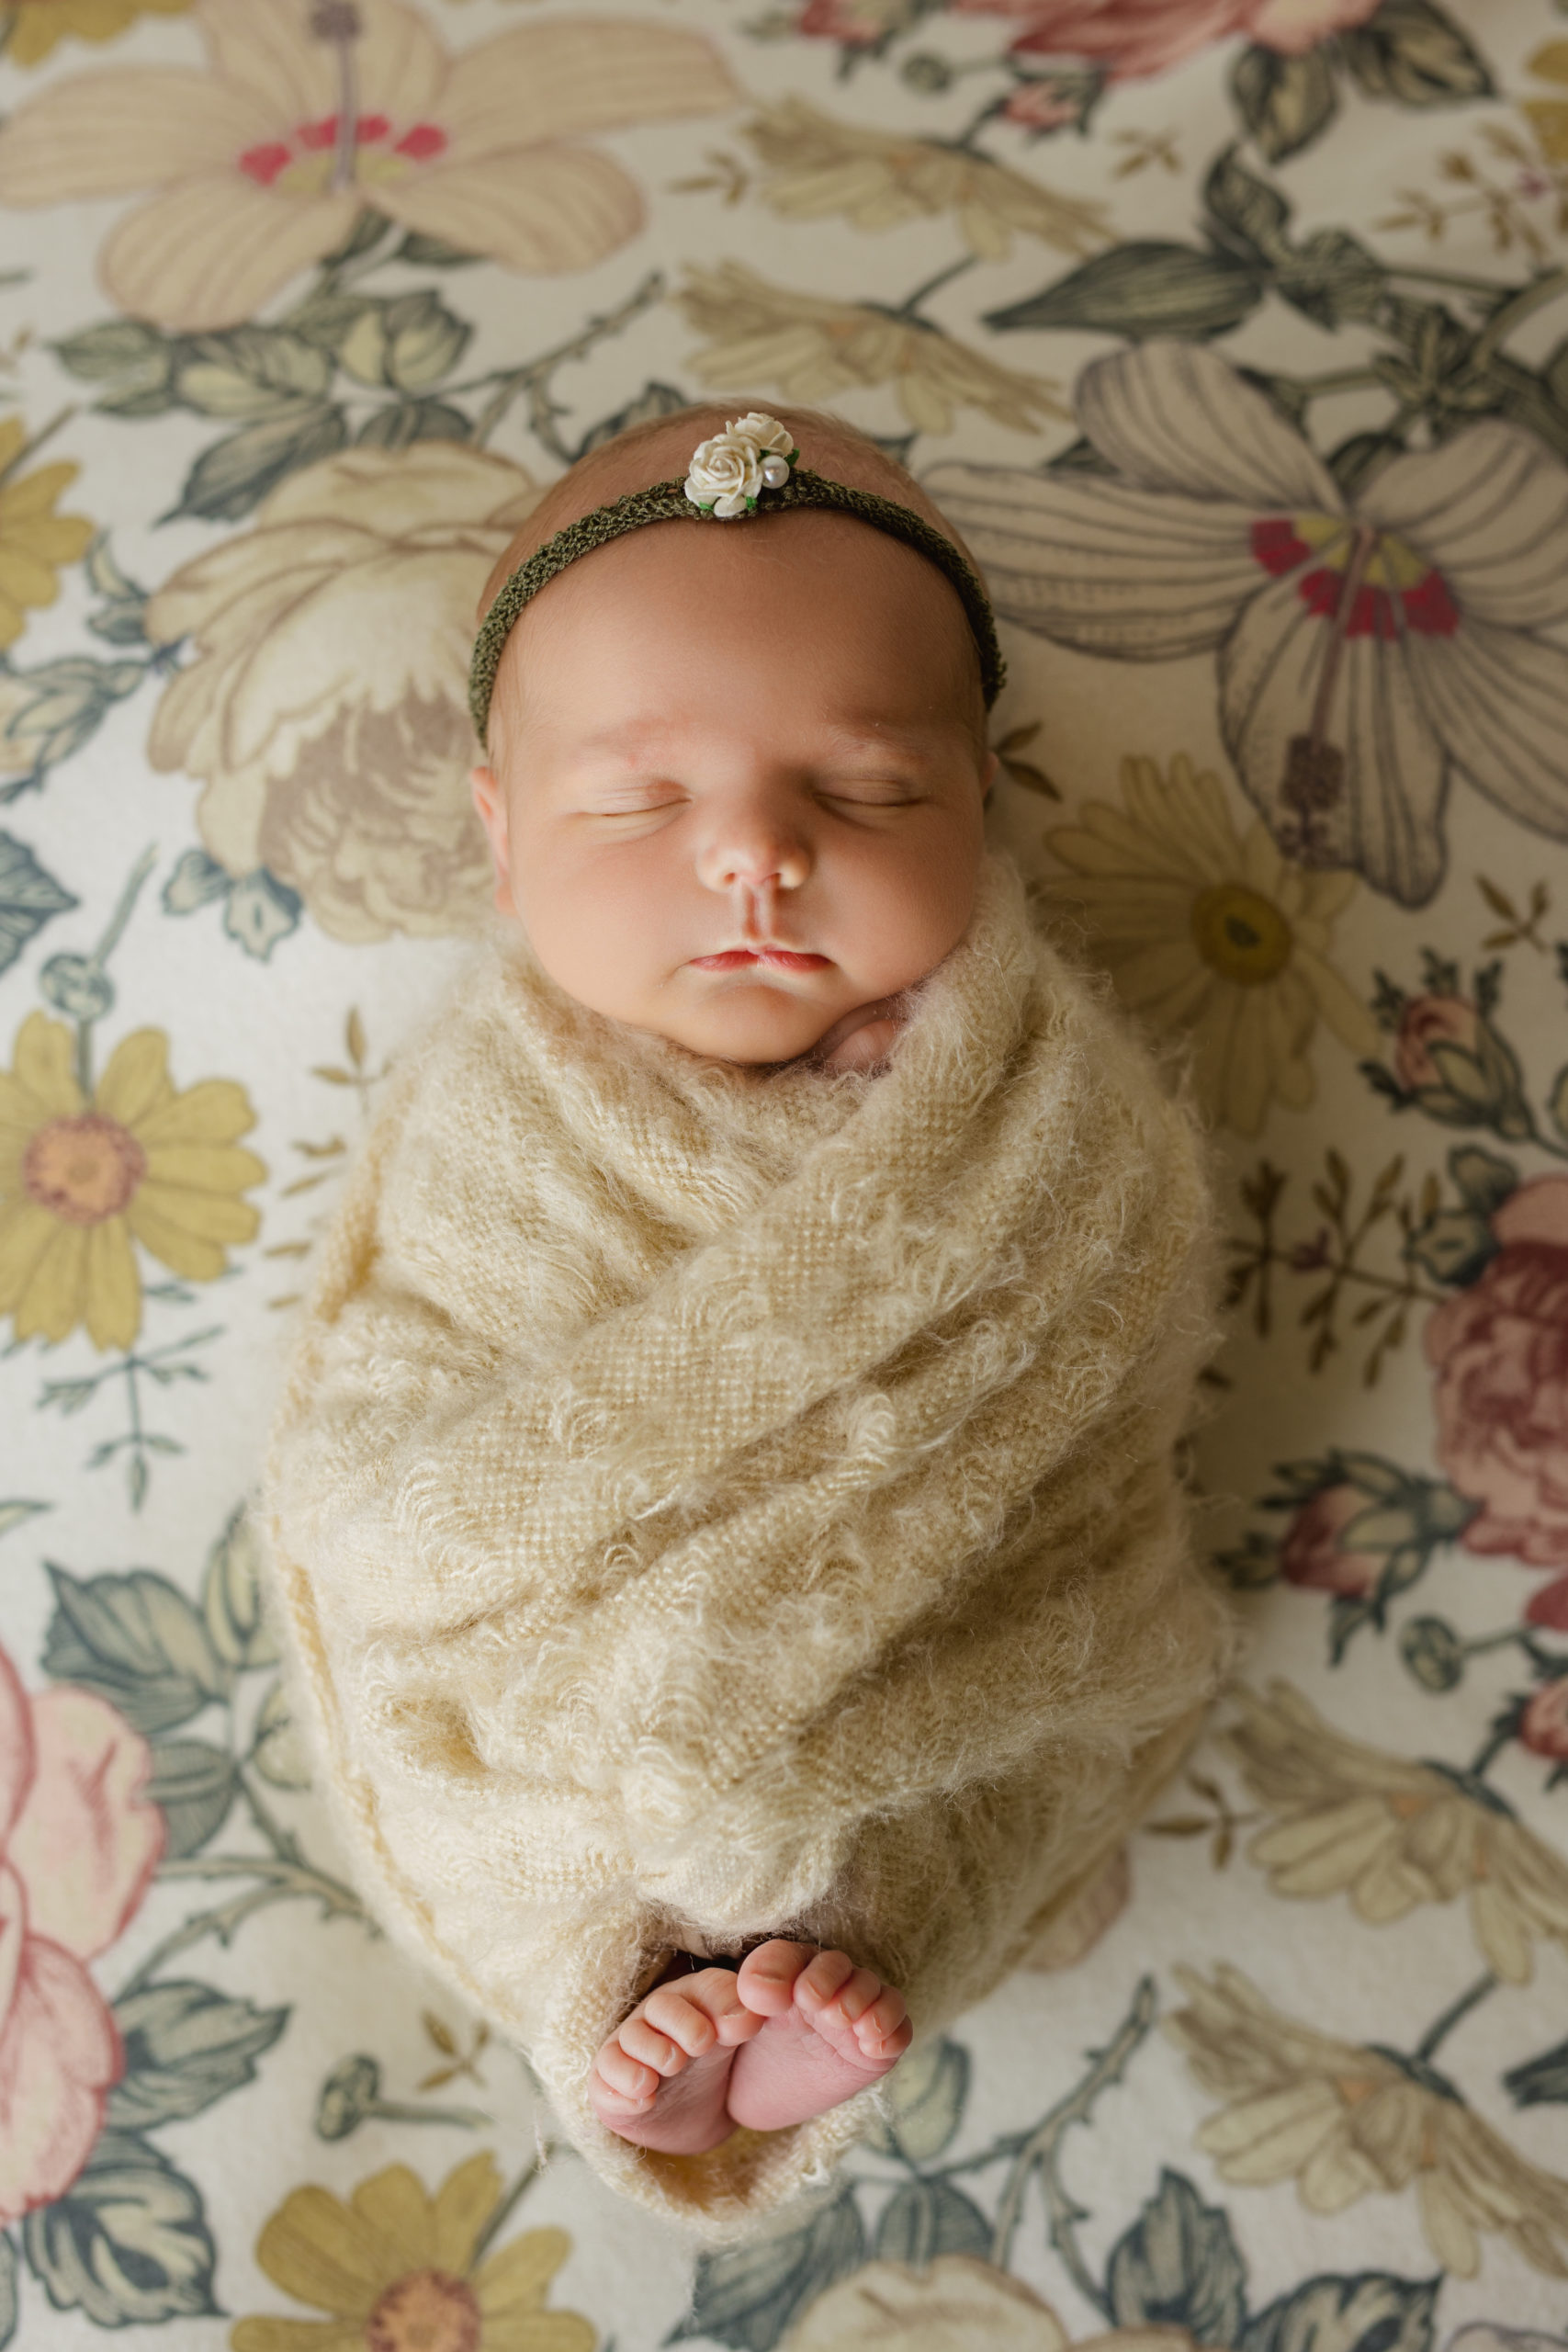 Milwaukee newborn photographer posing a newborn baby girl on a warm floral background